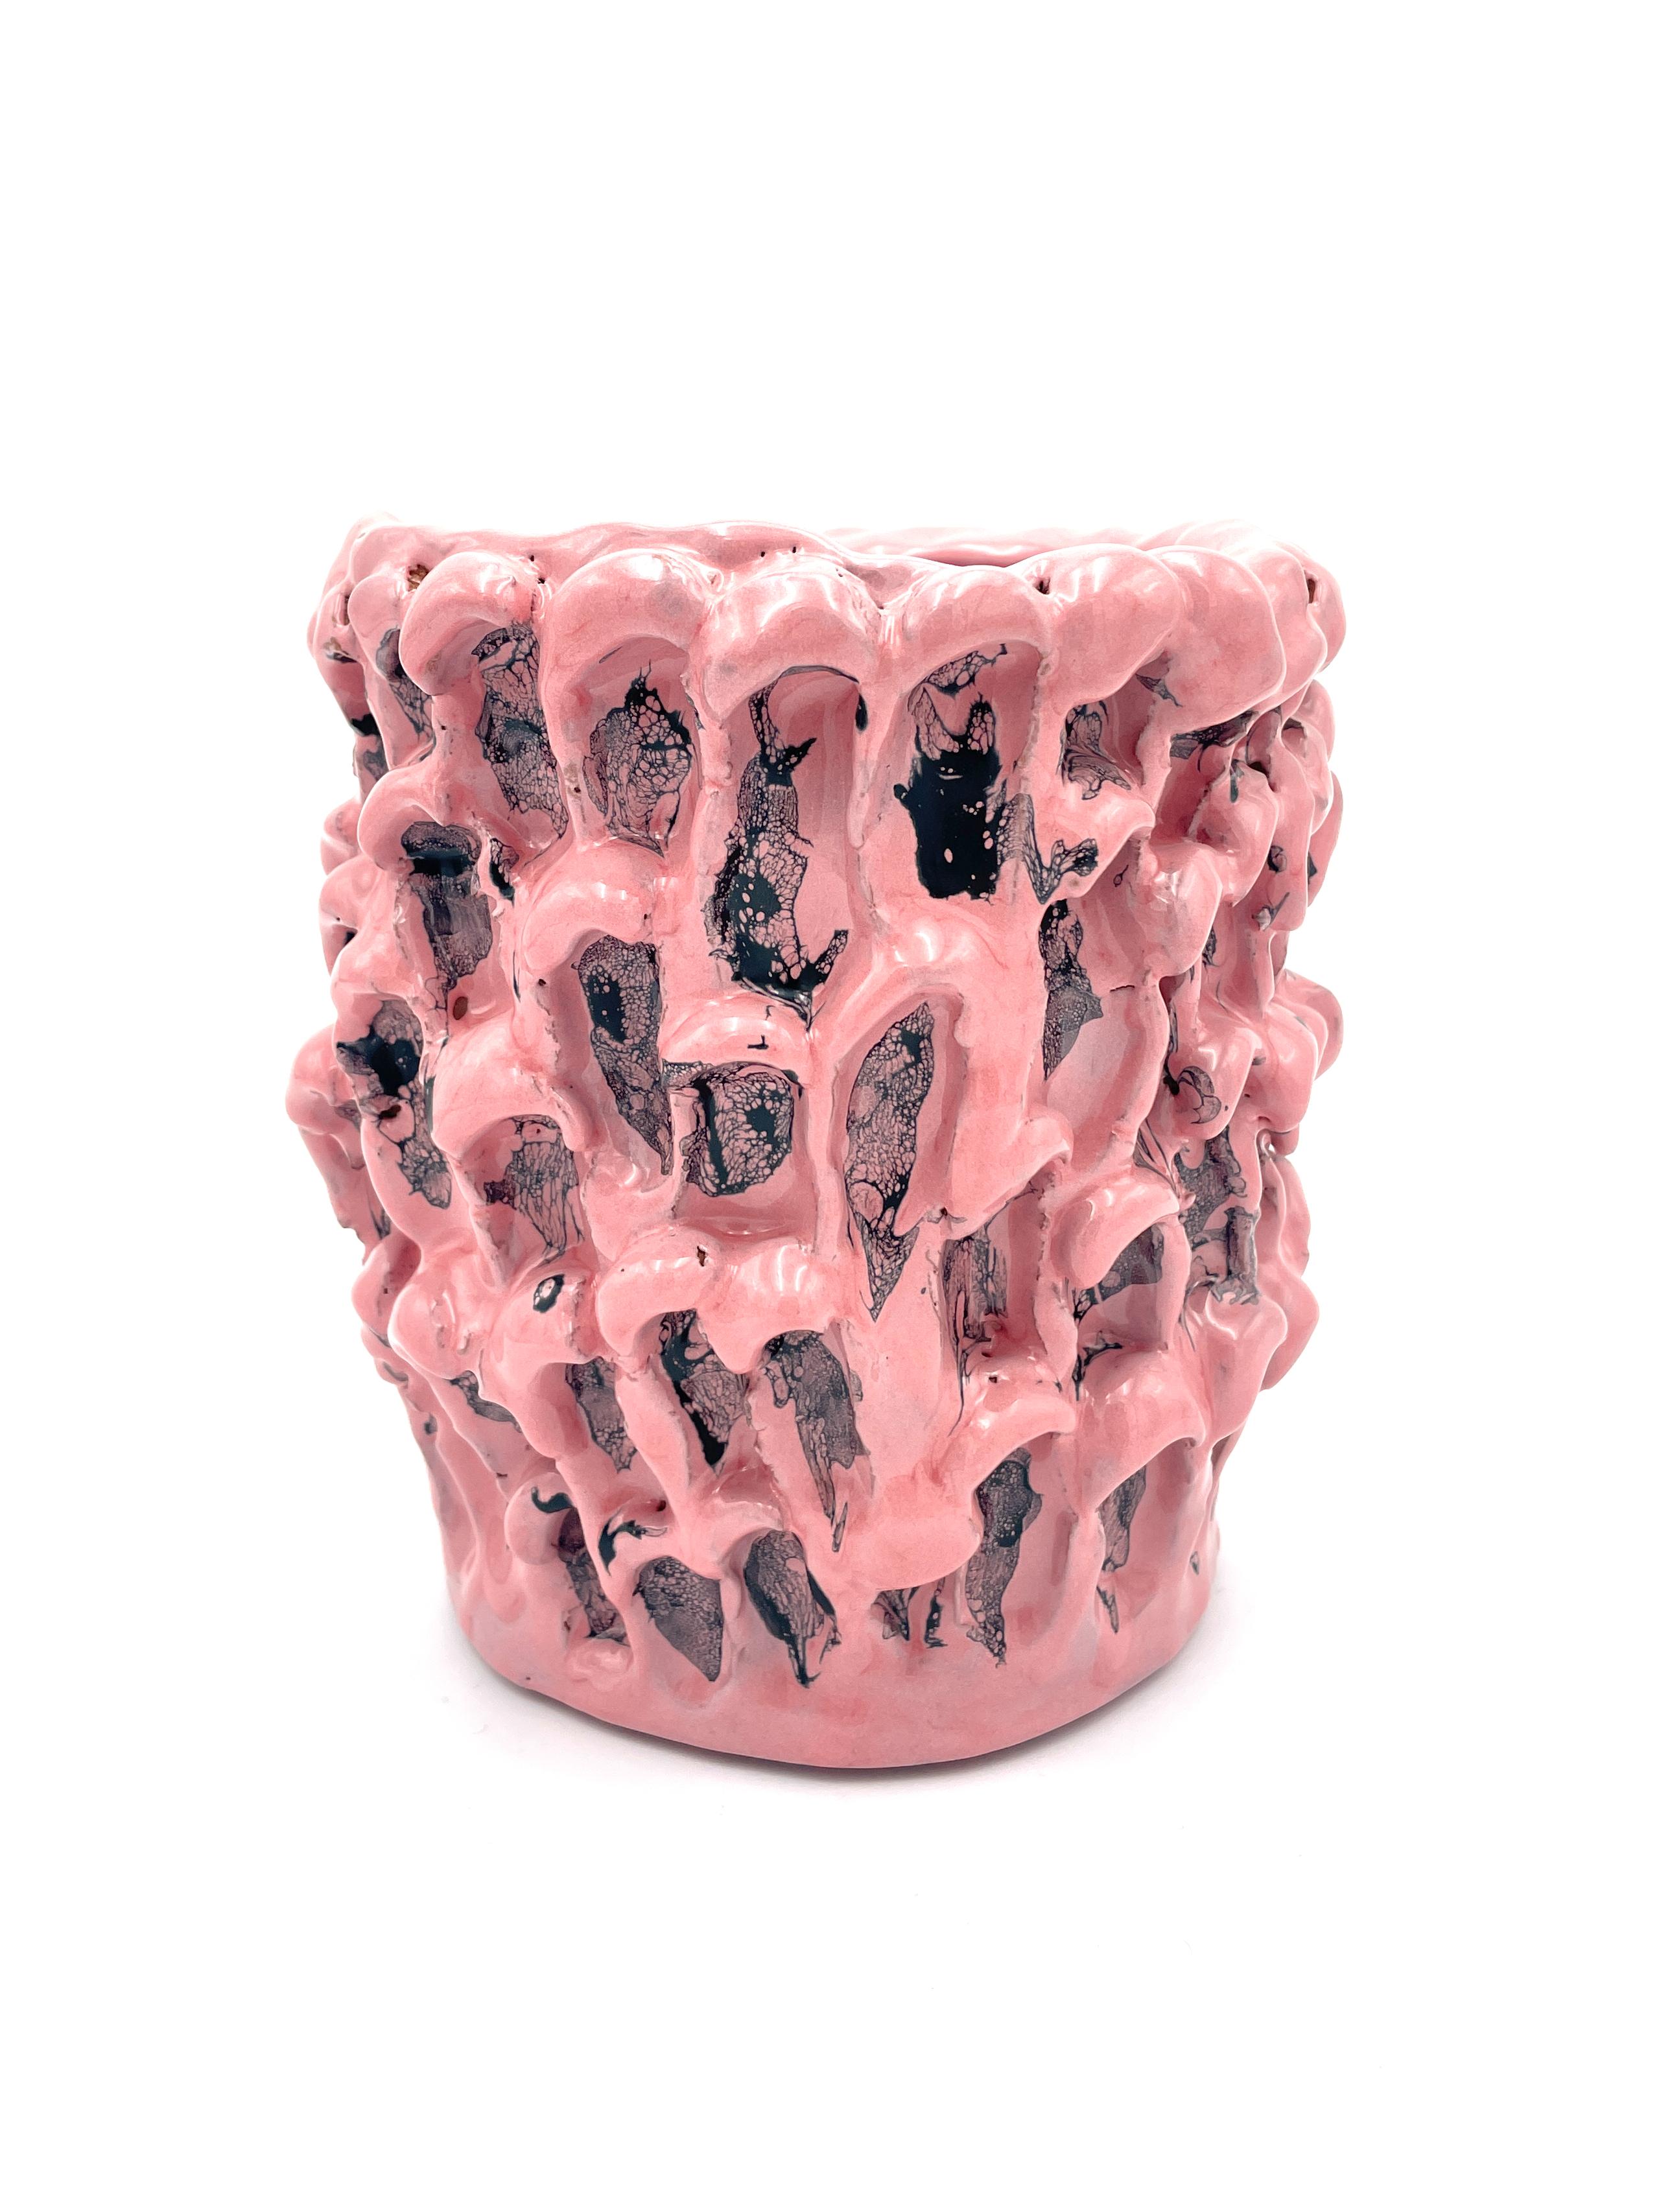 Onda vase in pink and matte black n. 01 / 20 numbered serie
Unique handmade Piece
Glazed earthenware by Daria Dazzan
Earthenware, glazes
Measures: 19 x 20 cm ab.

Handmade earthenware vase by Daria Dazzan, unique piece, numbered.
Daria Dazzan